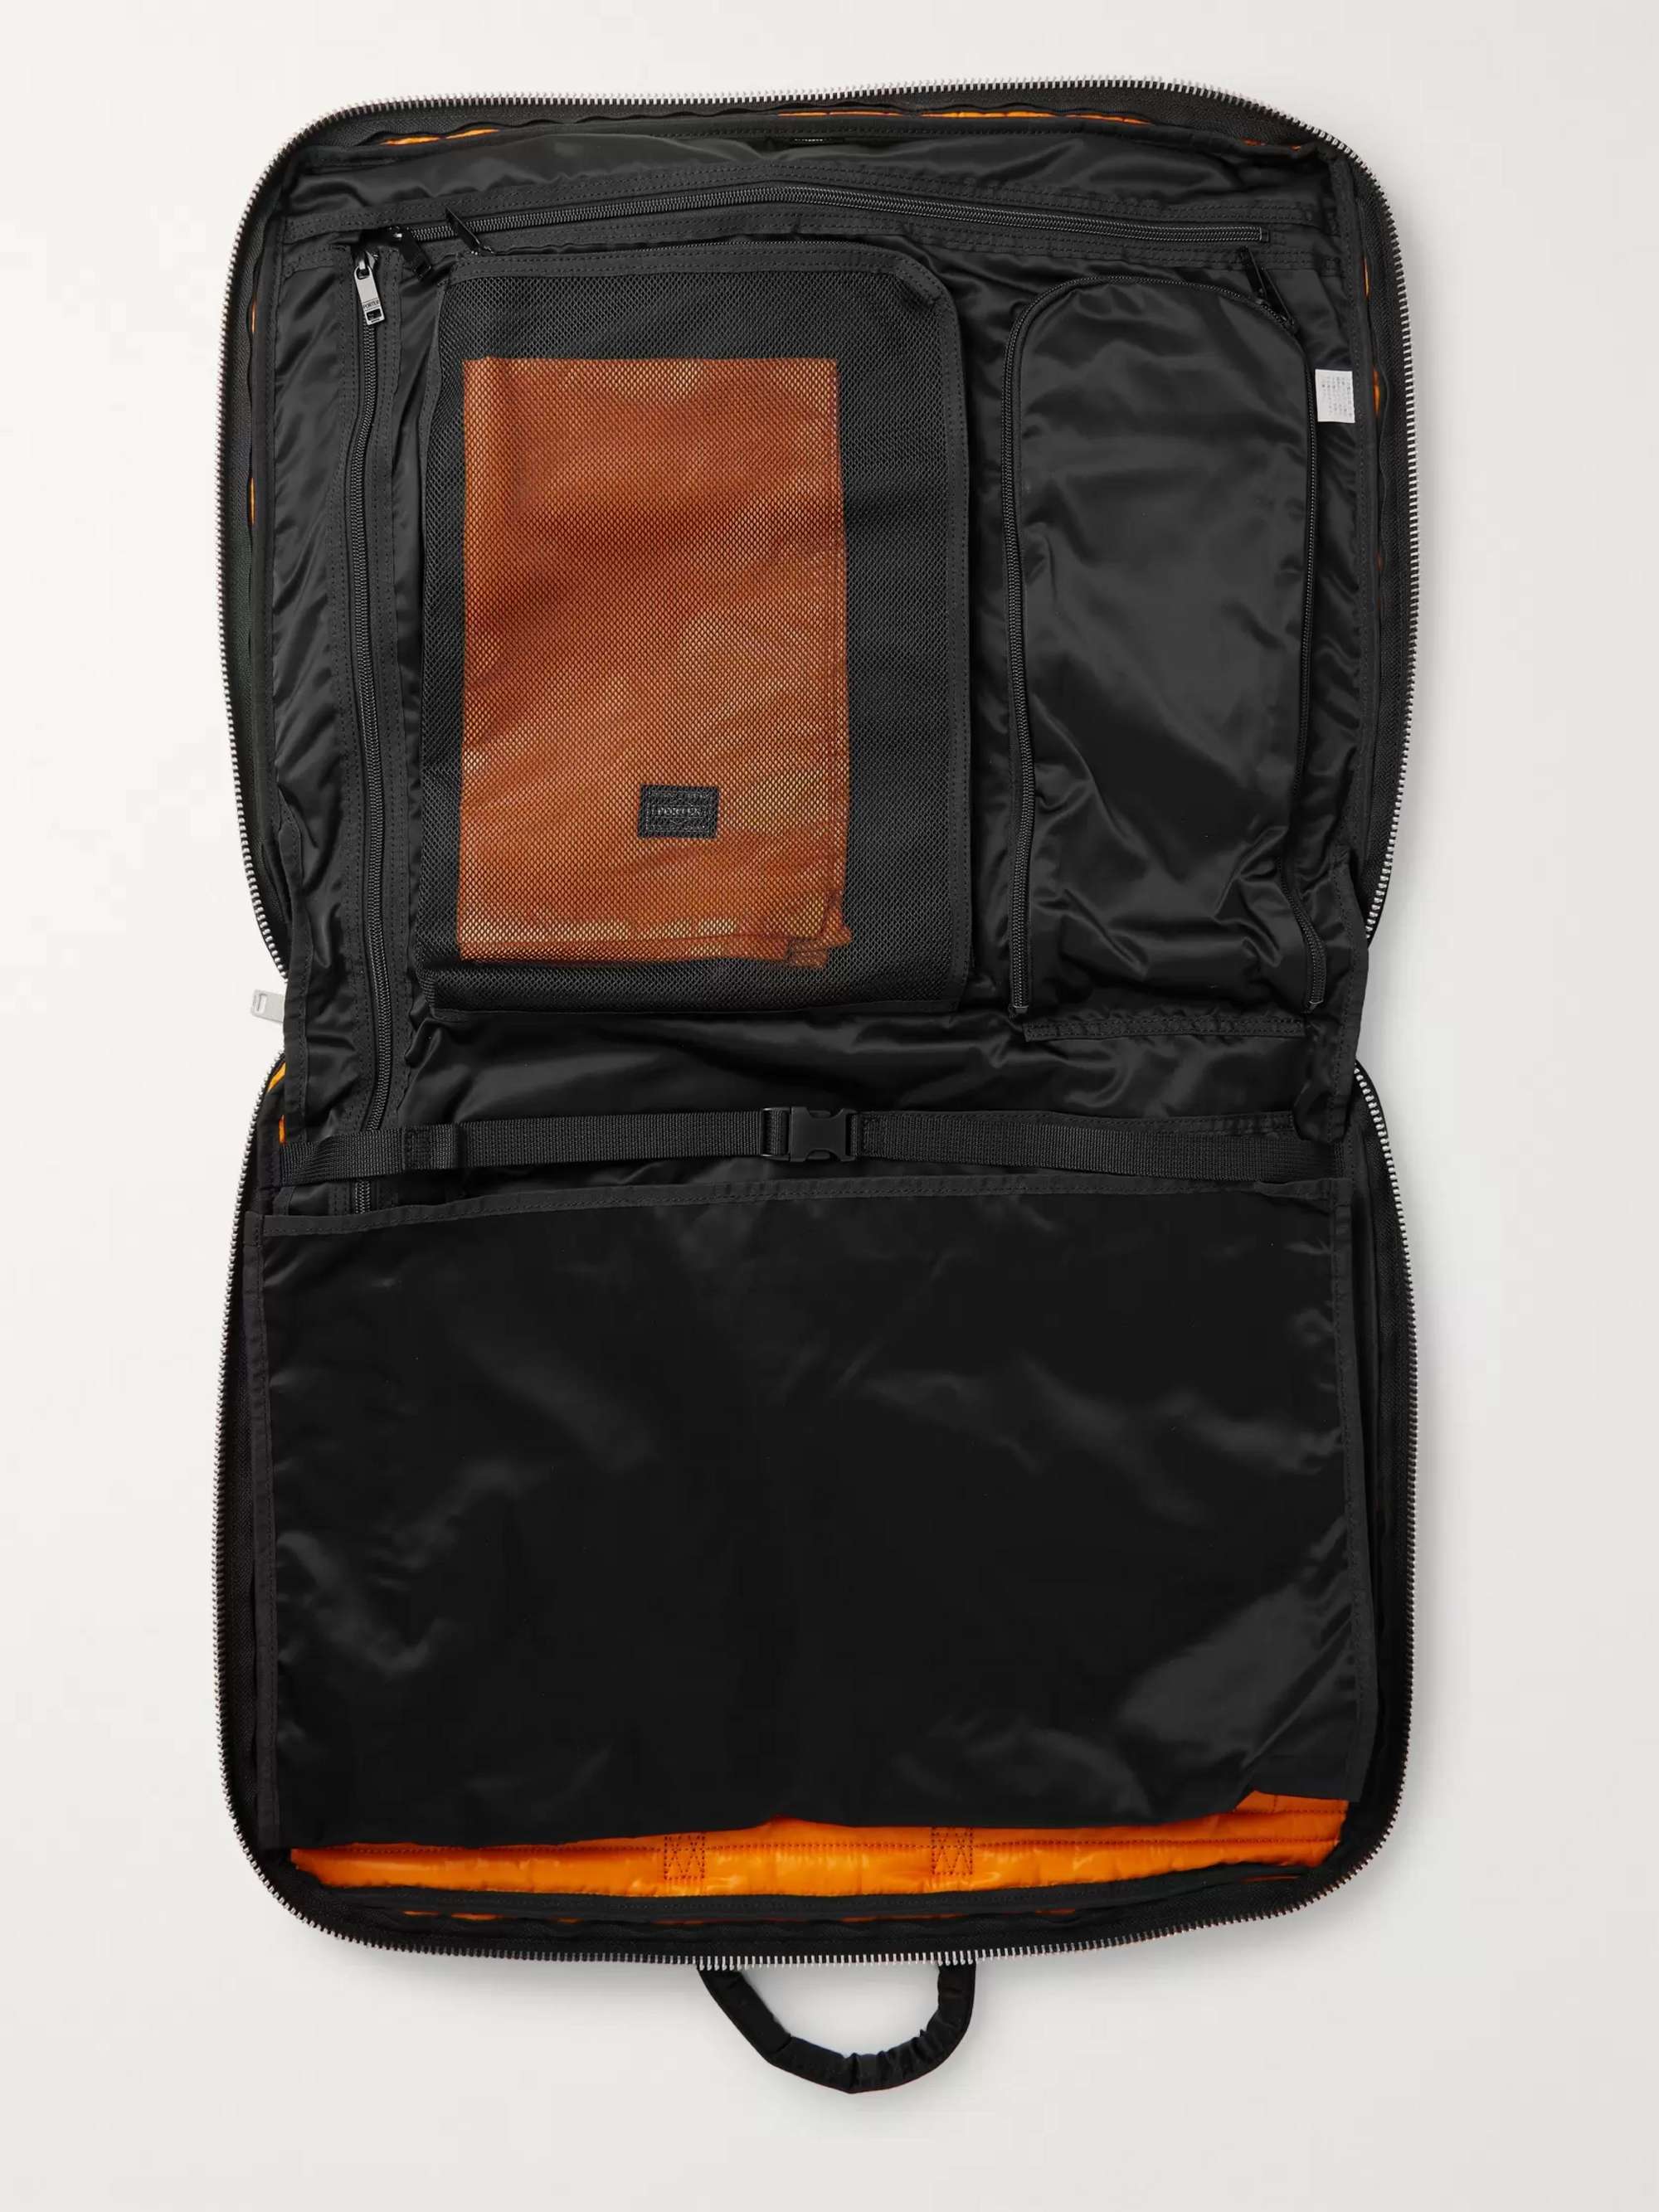 PORTER-YOSHIDA & CO Tanker 2Way Nylon Garment Bag